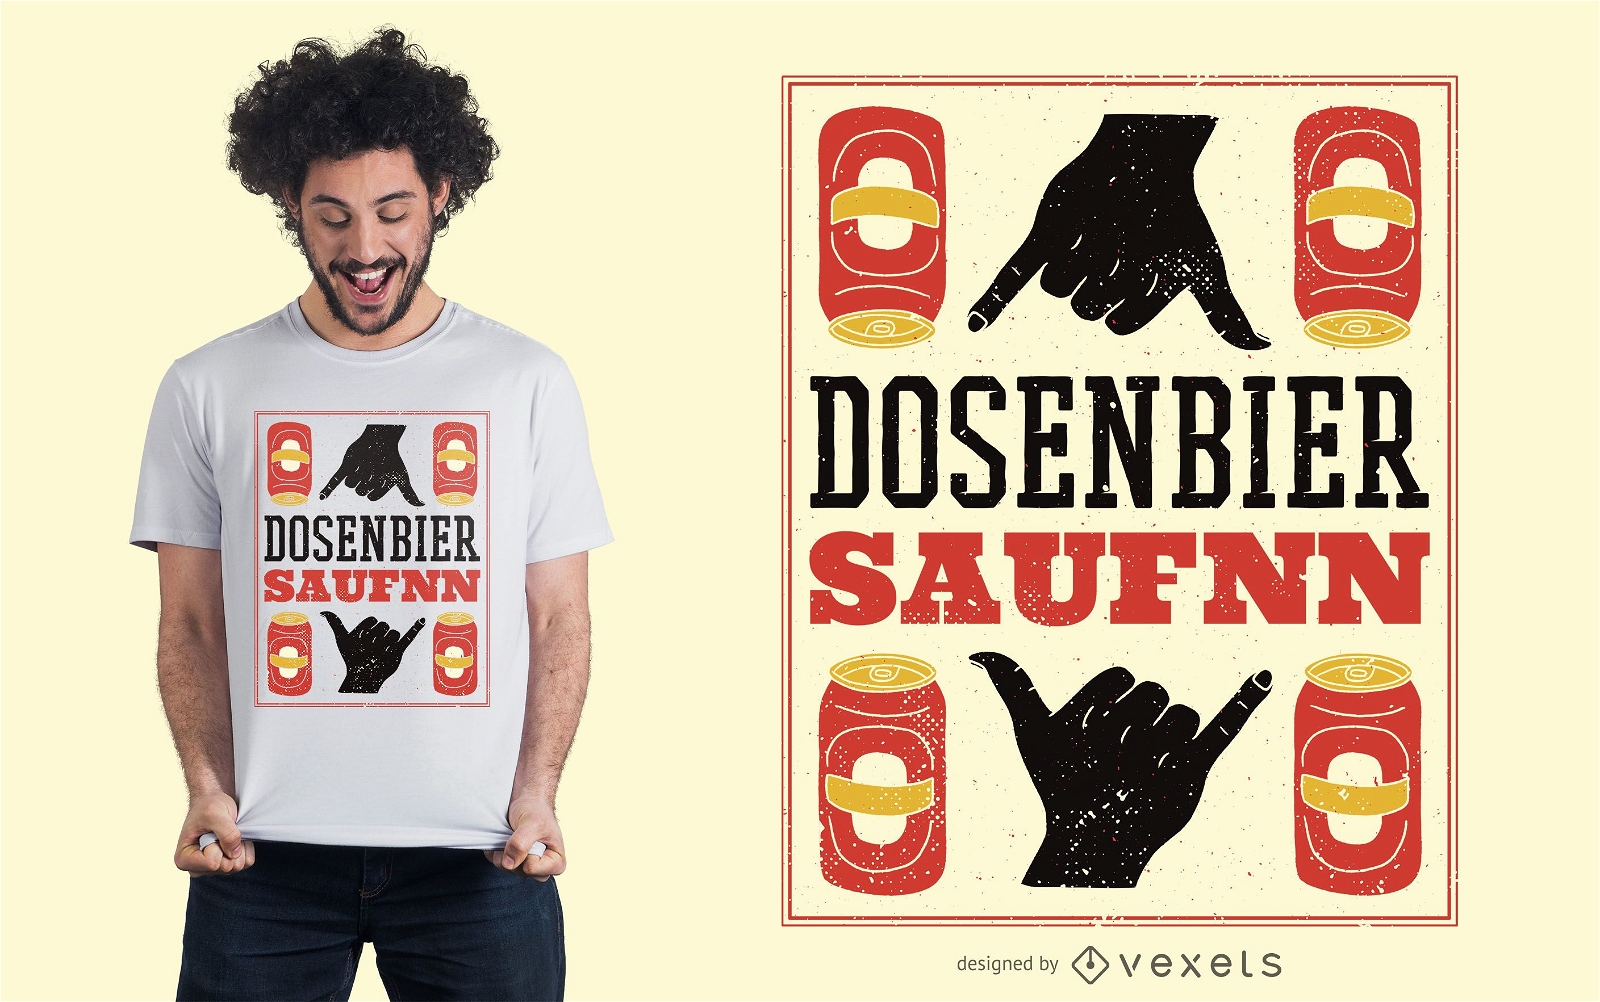 Canned Beer German T-Shirt Design